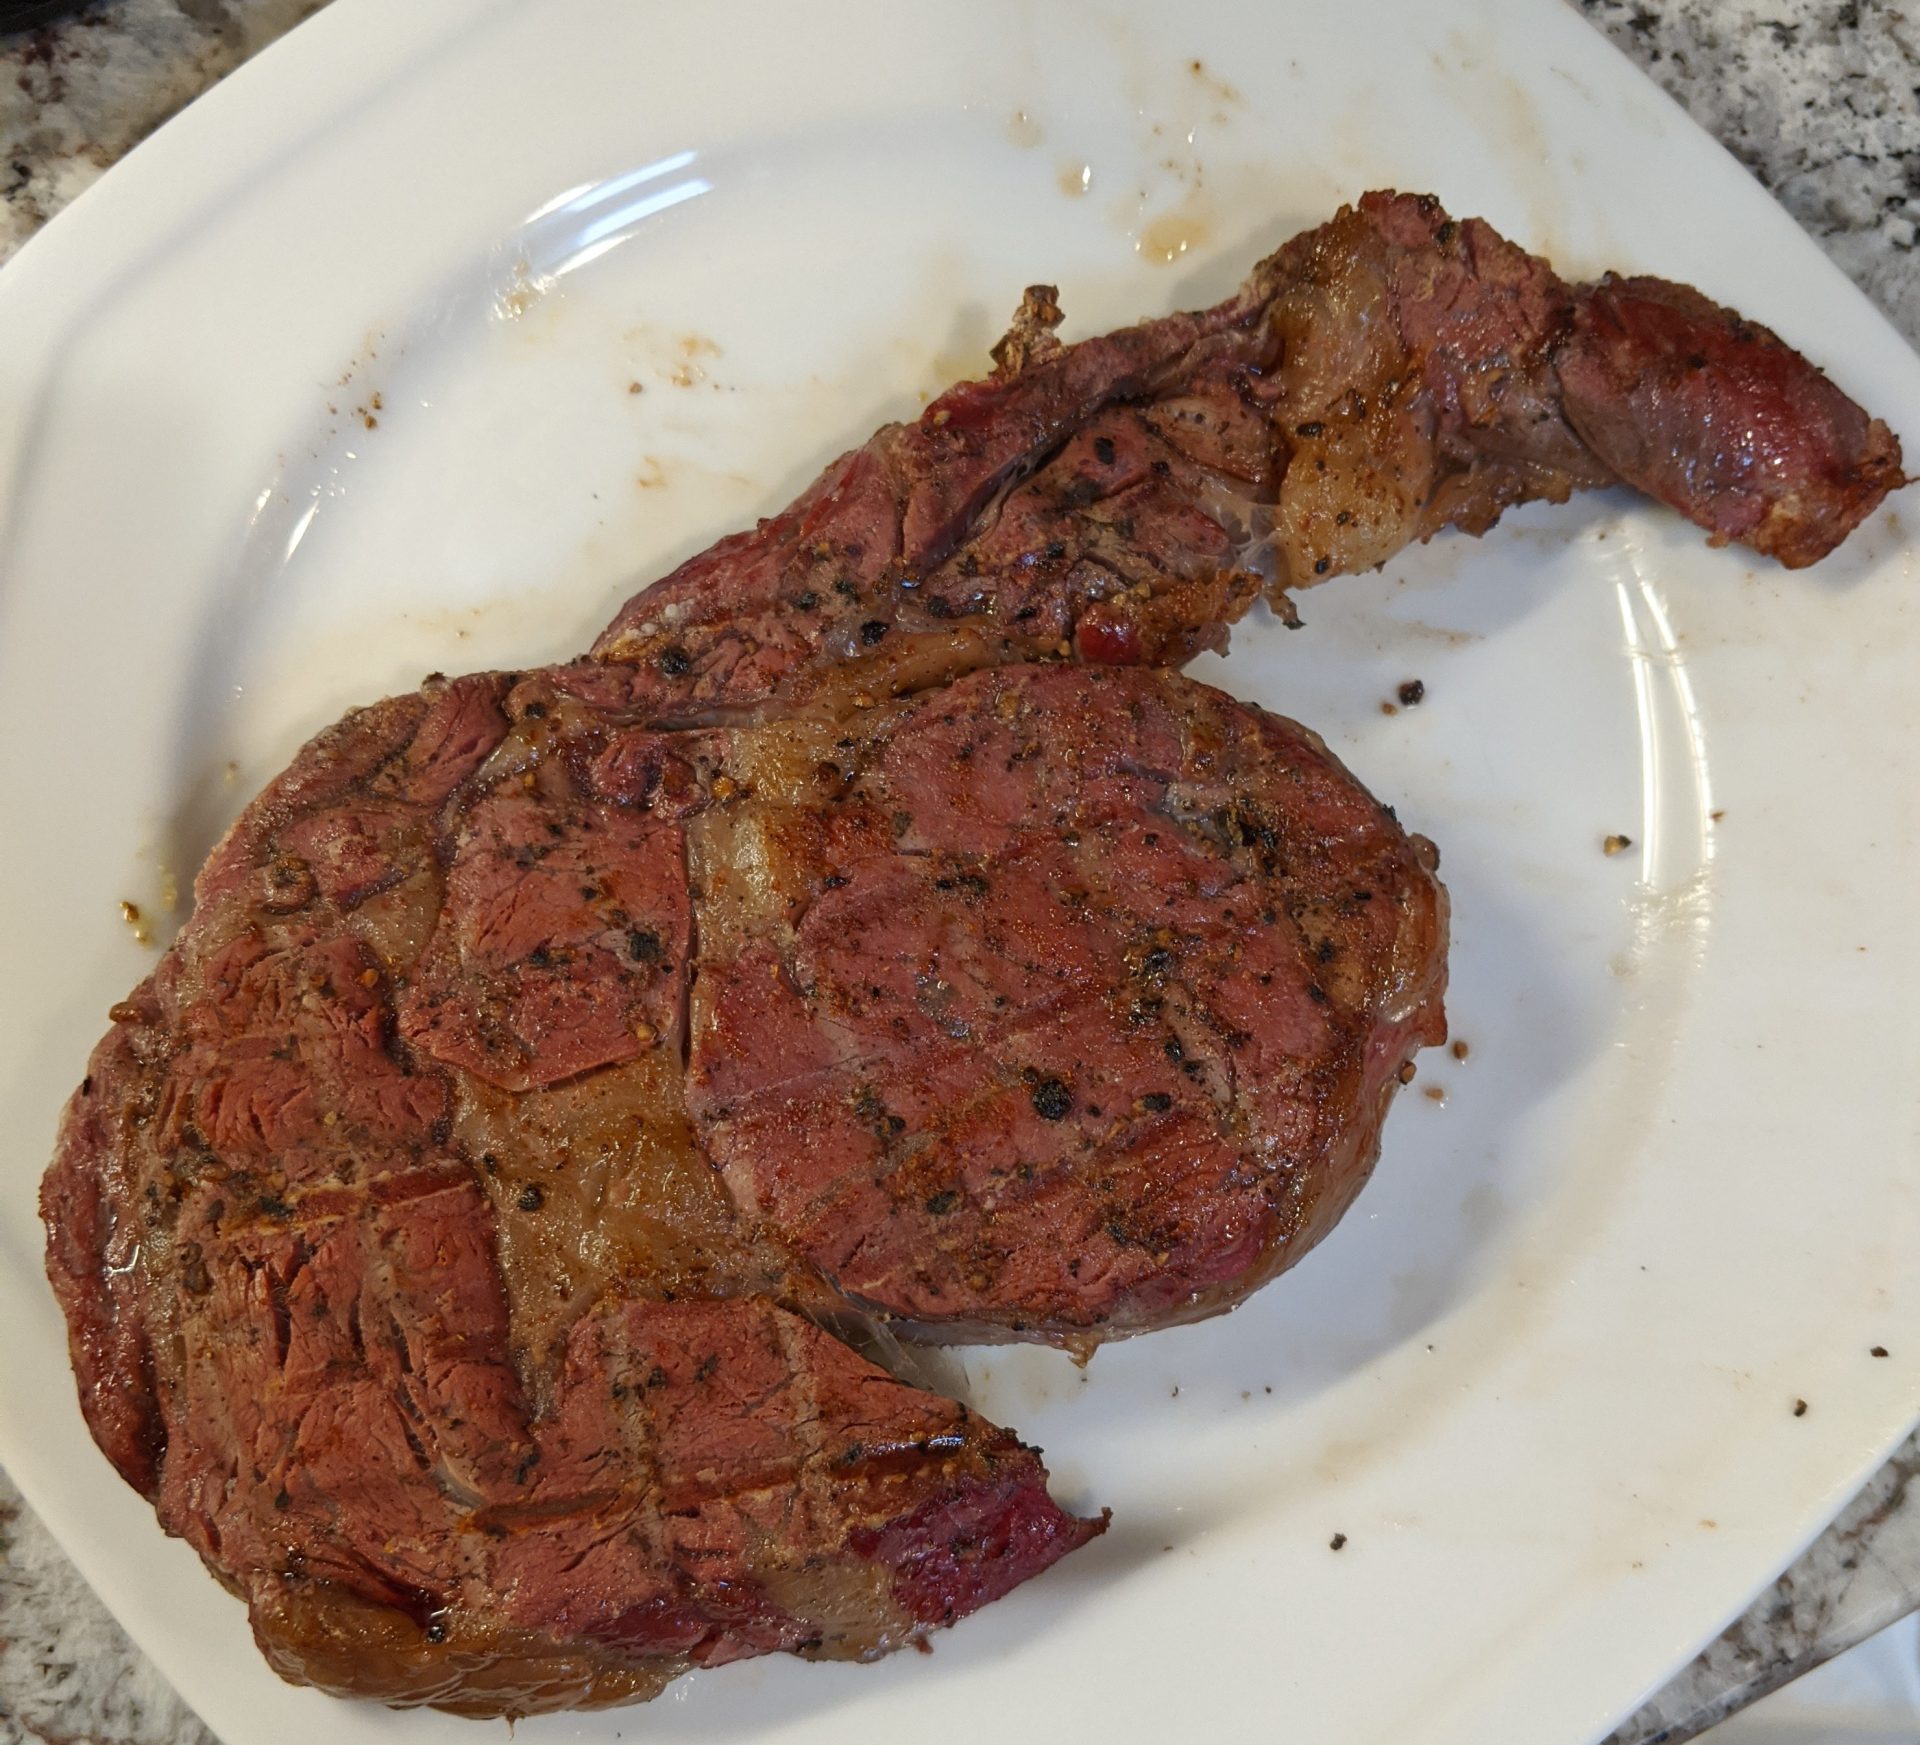 Reverse seared ribeye steak on a white dinner plate